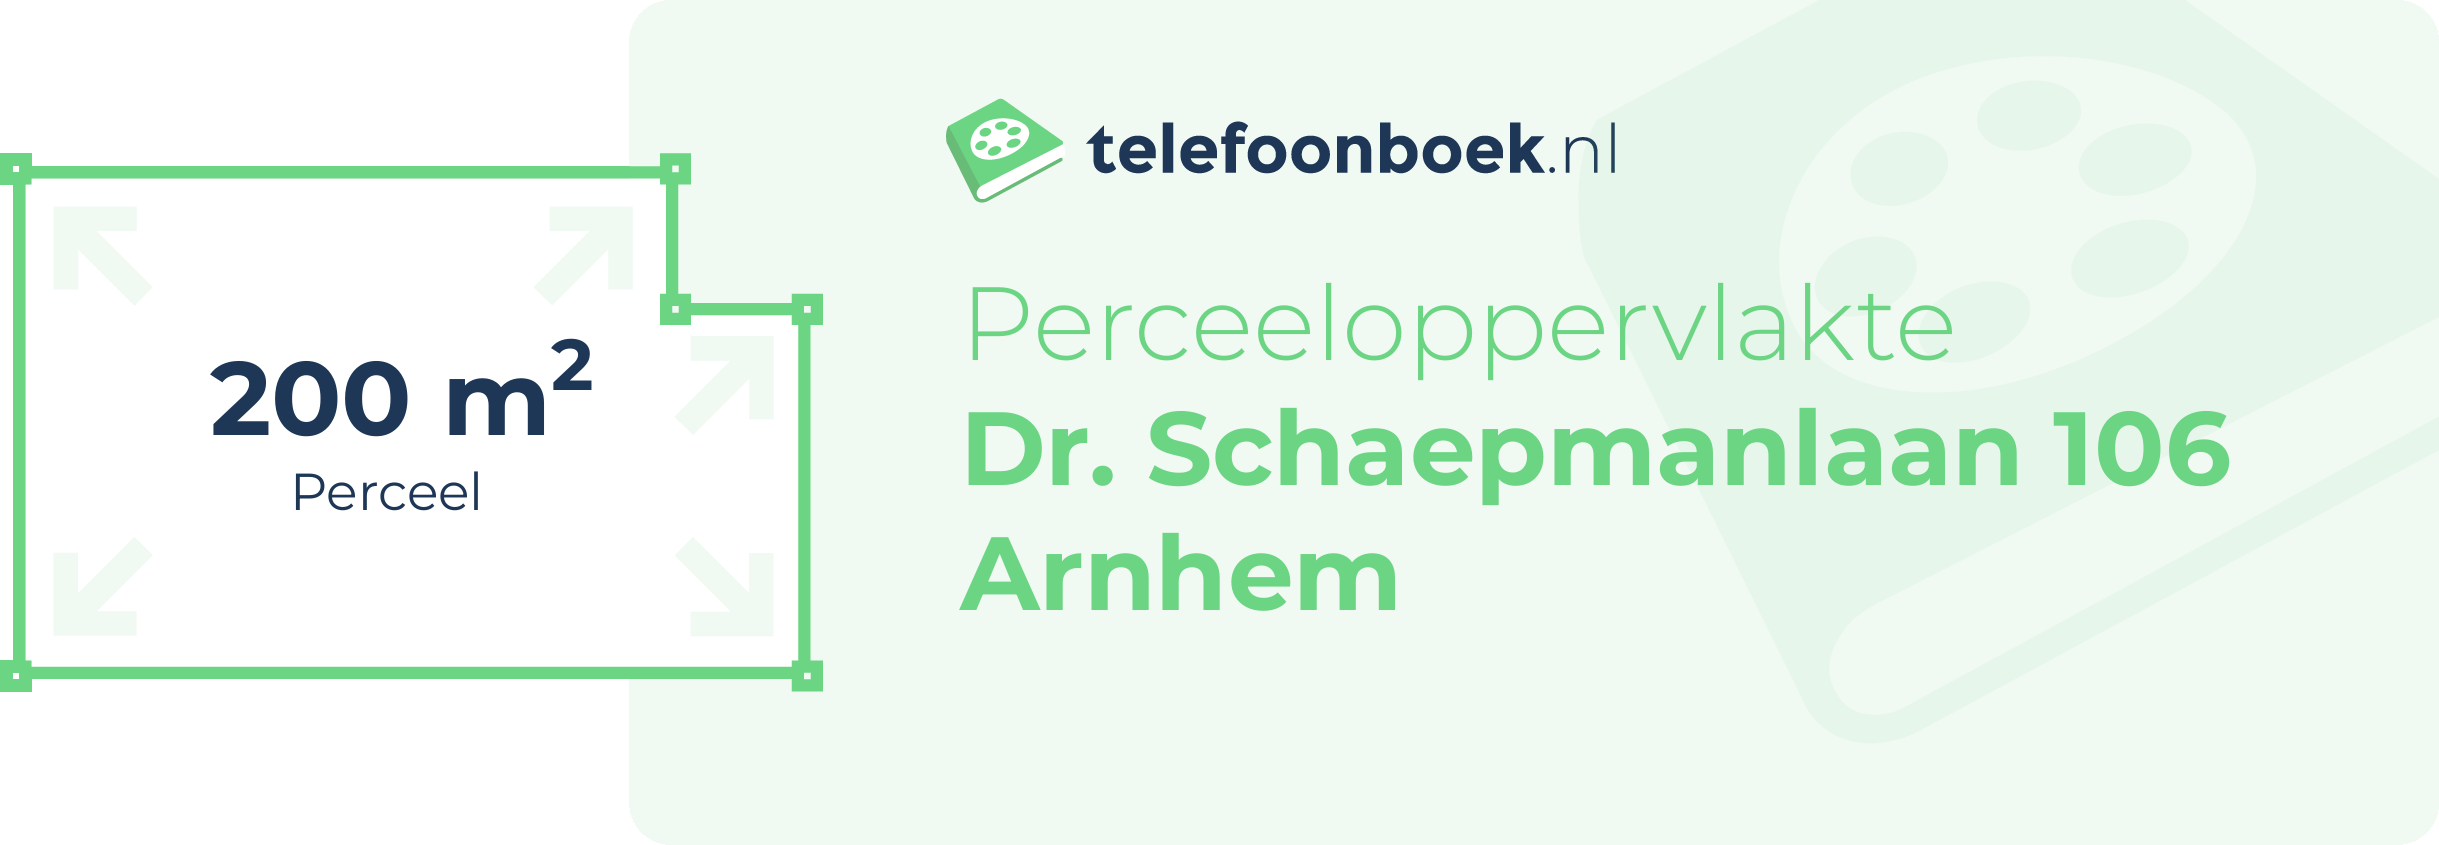 Perceeloppervlakte Dr. Schaepmanlaan 106 Arnhem